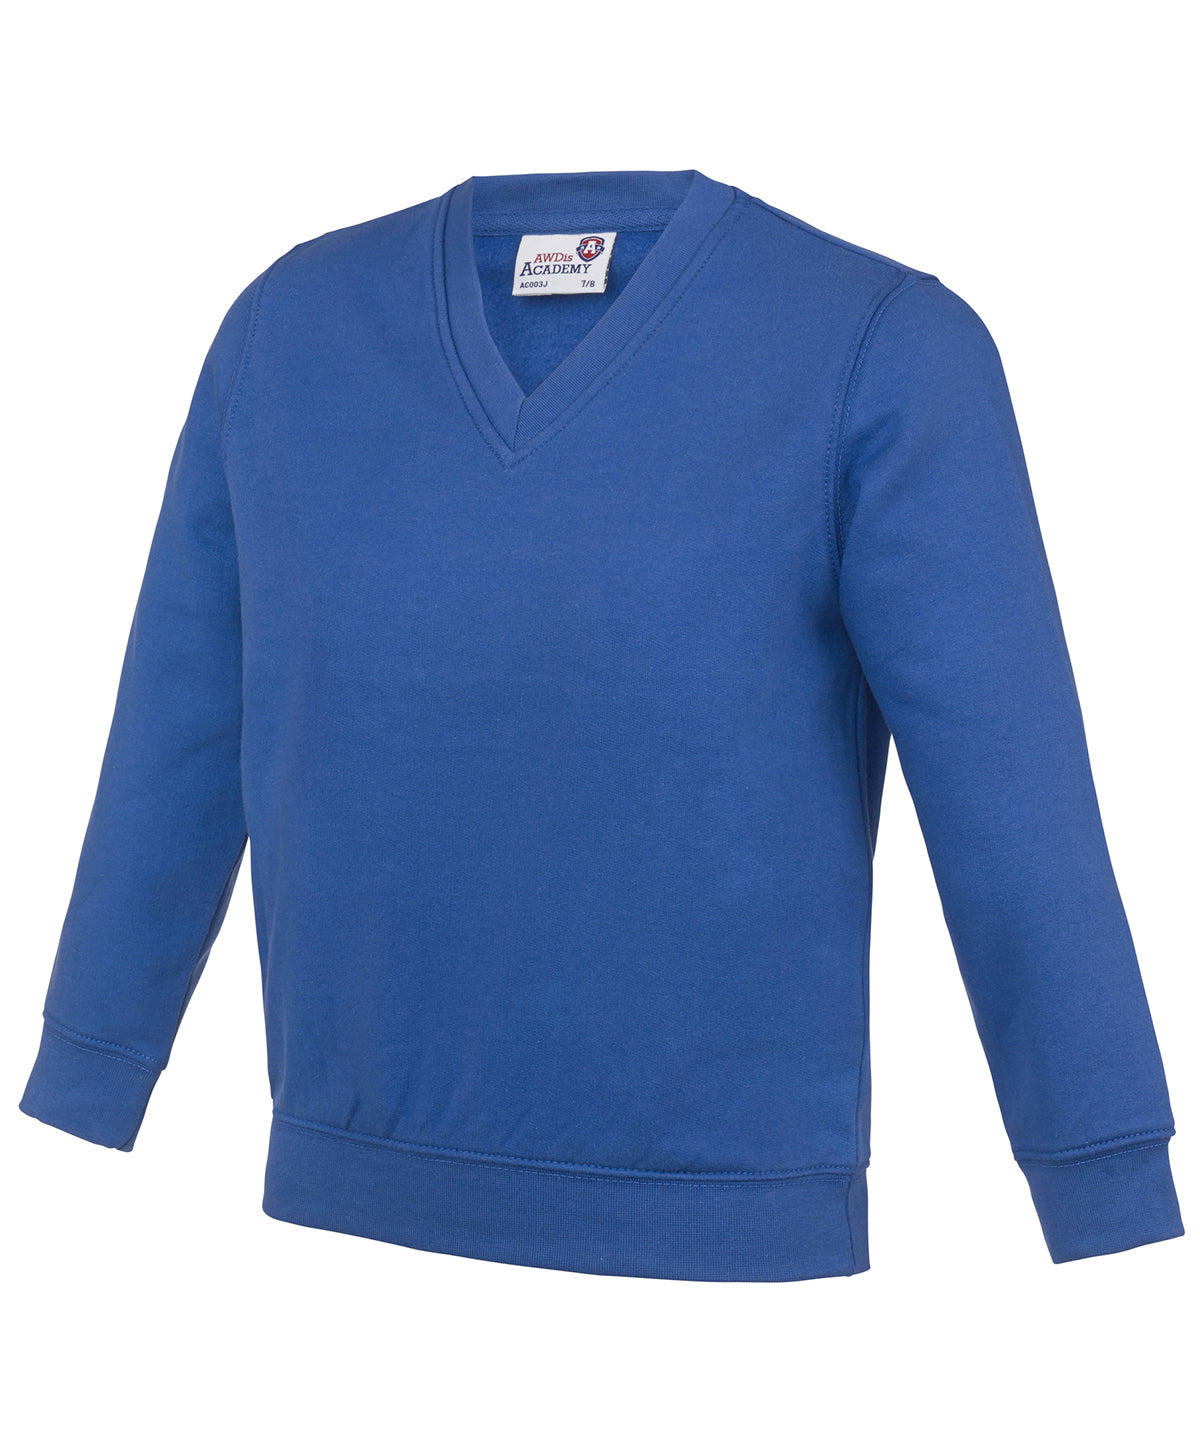 Personalised Sweatshirts - Burgundy AWDis Academy Kids Academy v-neck sweatshirt